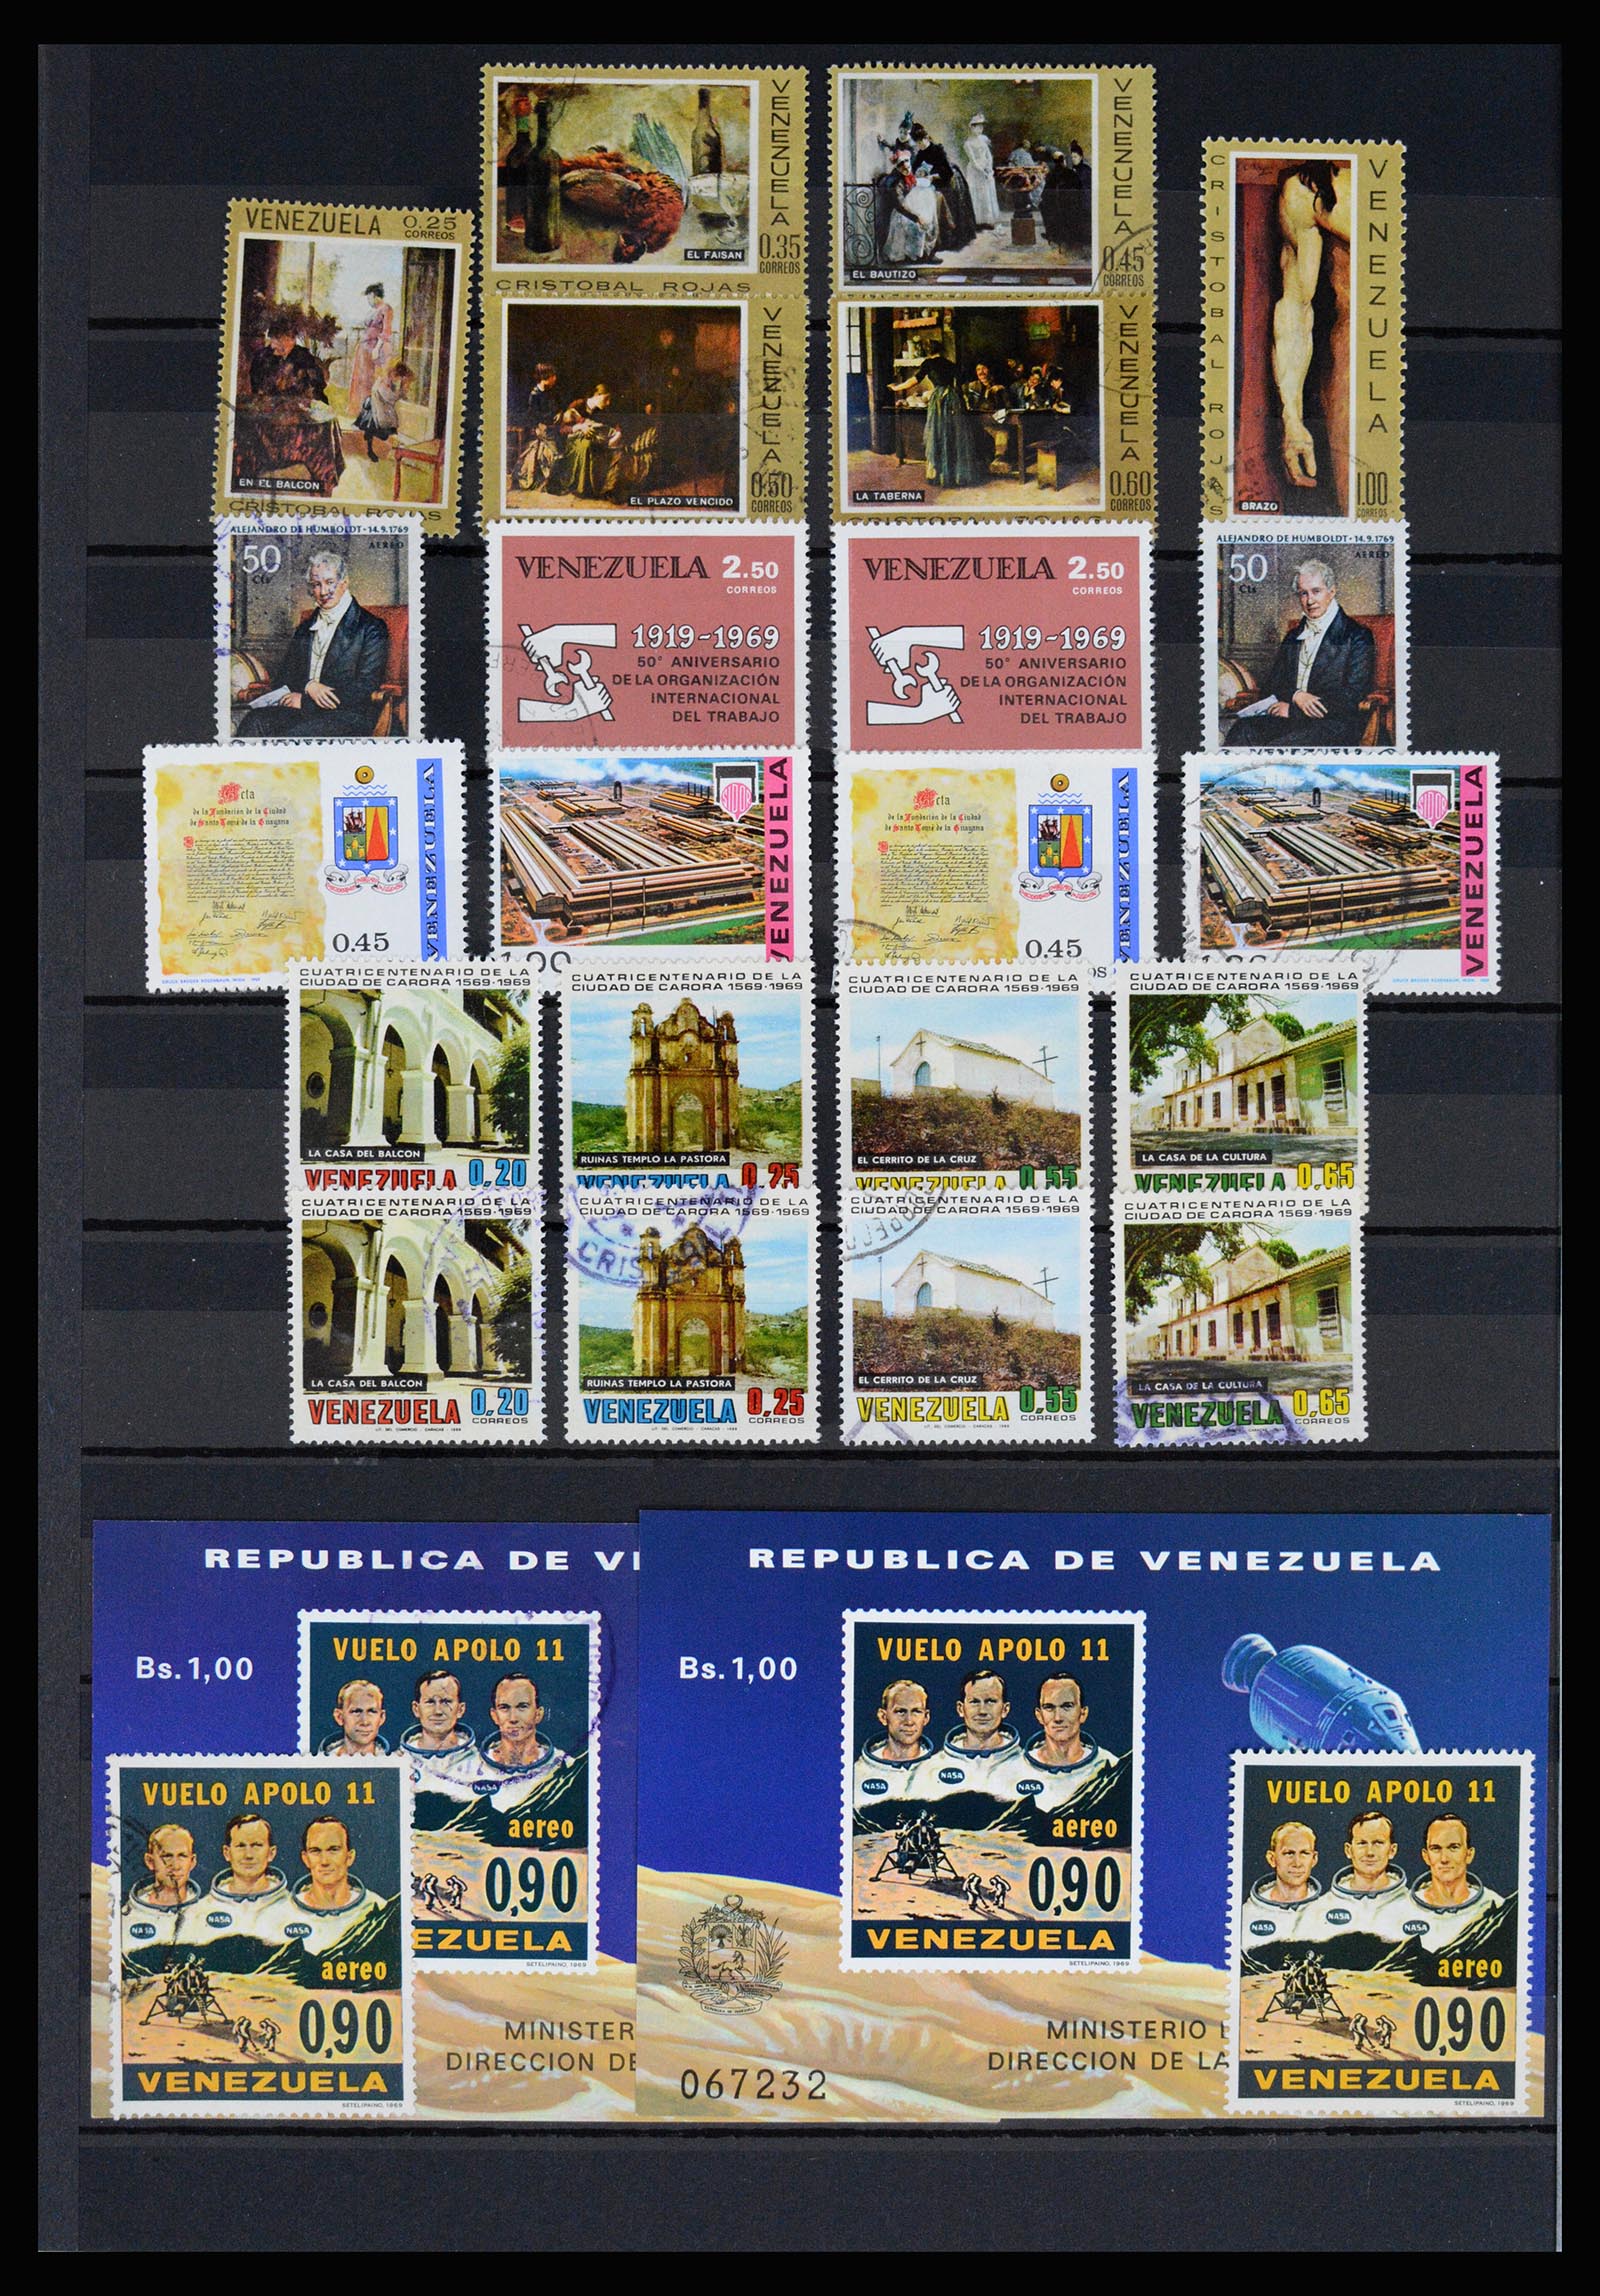 36987 055 - Stamp collection 36987 Venezuela 1860-1995.